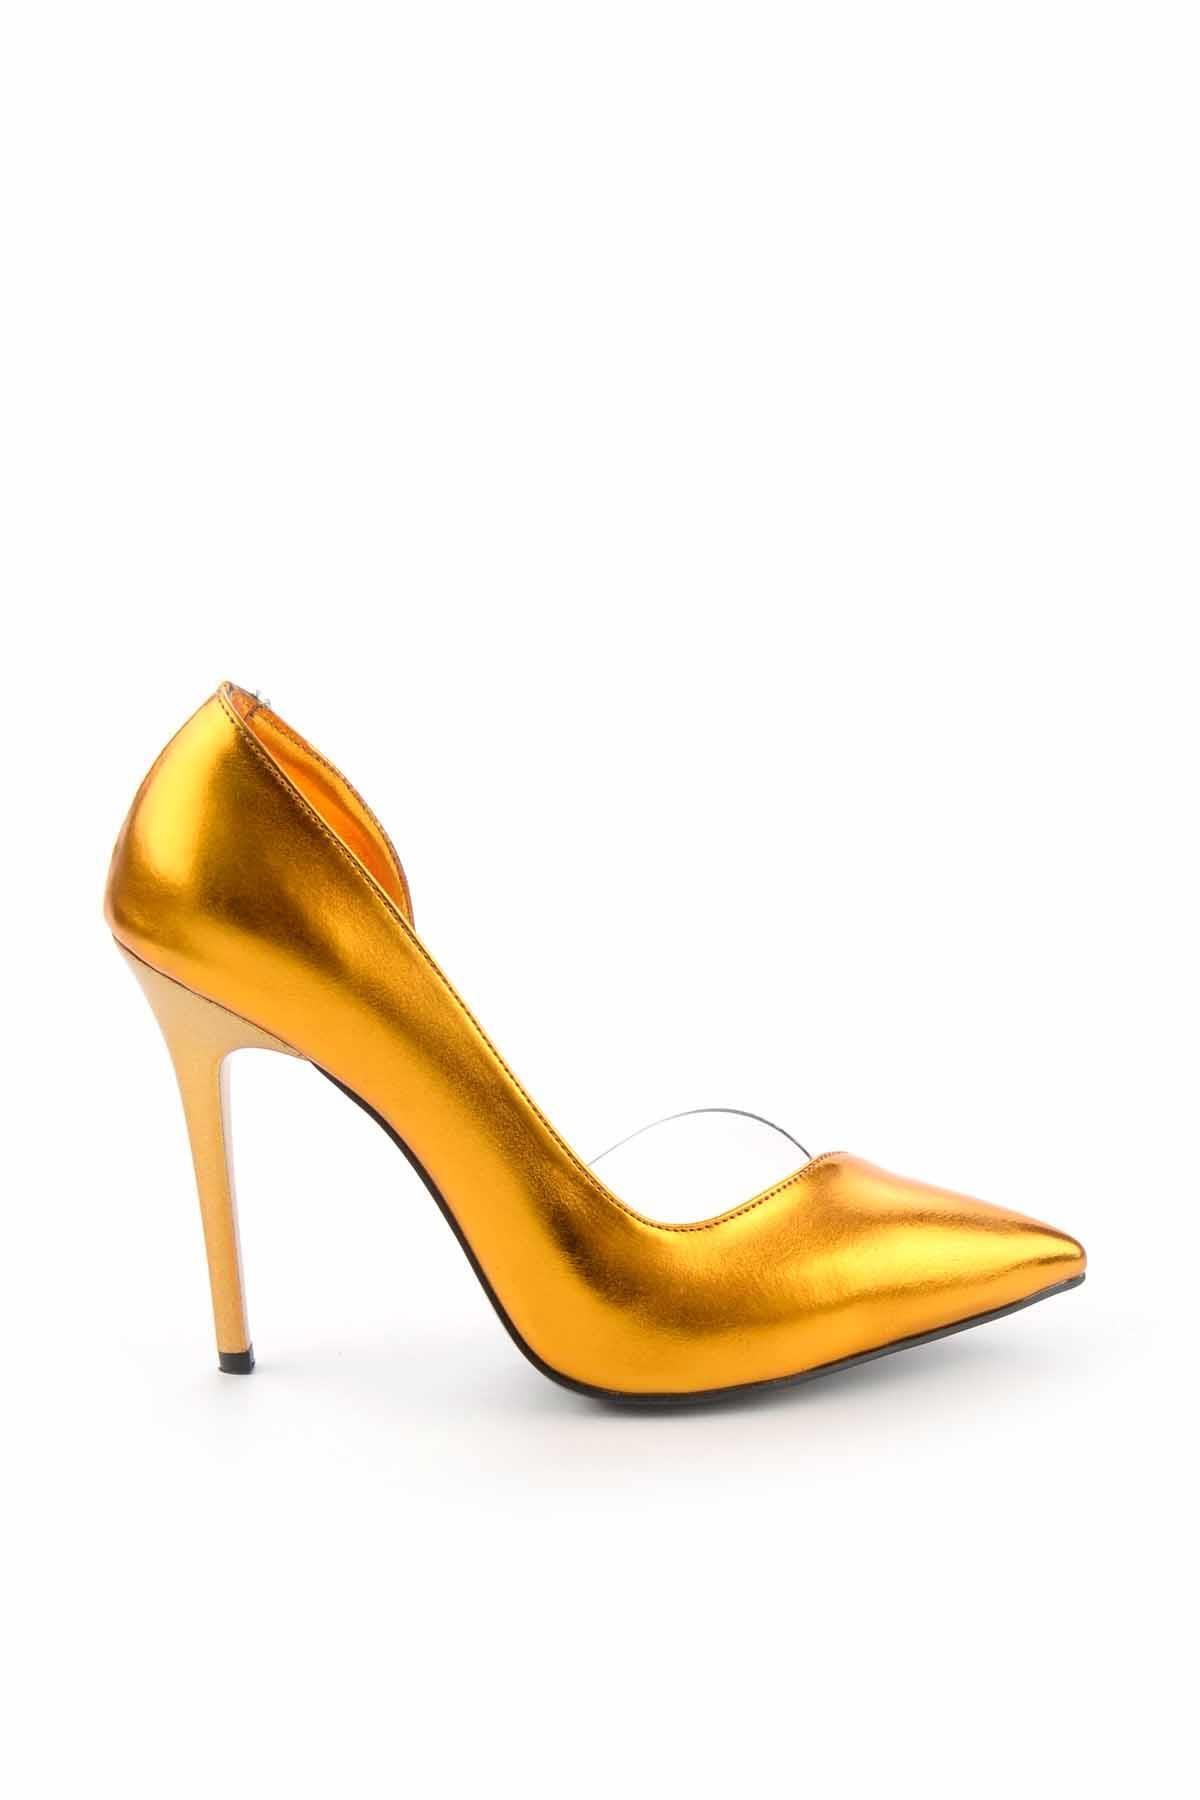 Bambi Metalik Turuncu Kadın Klasik Topuklu Ayakkabı K01596177209